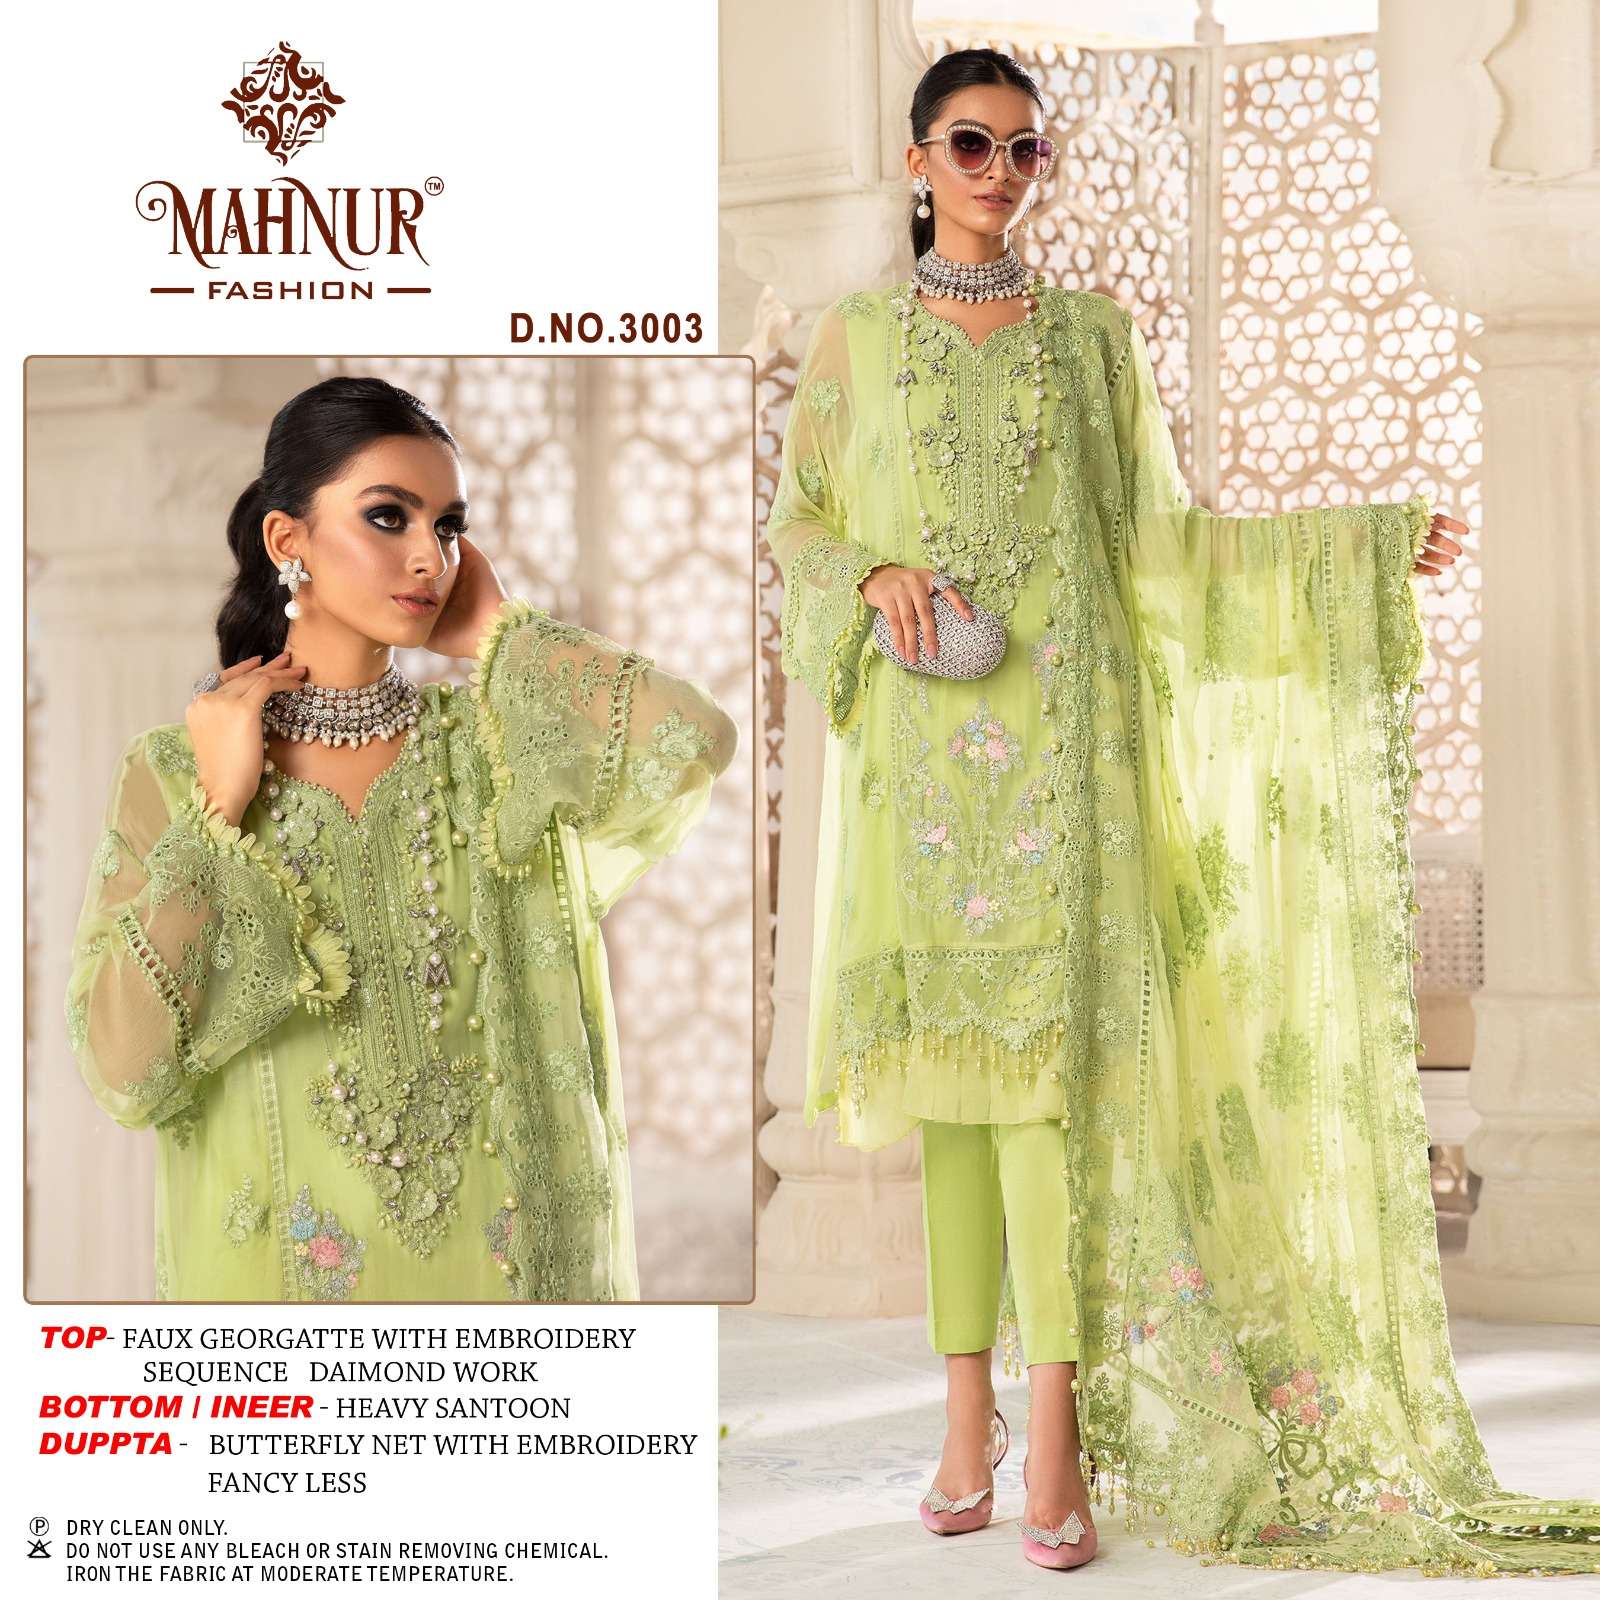 Mahnur Emaan Adeel Premium Collection Vol 3 Pakistani Suits Wholesale catalog